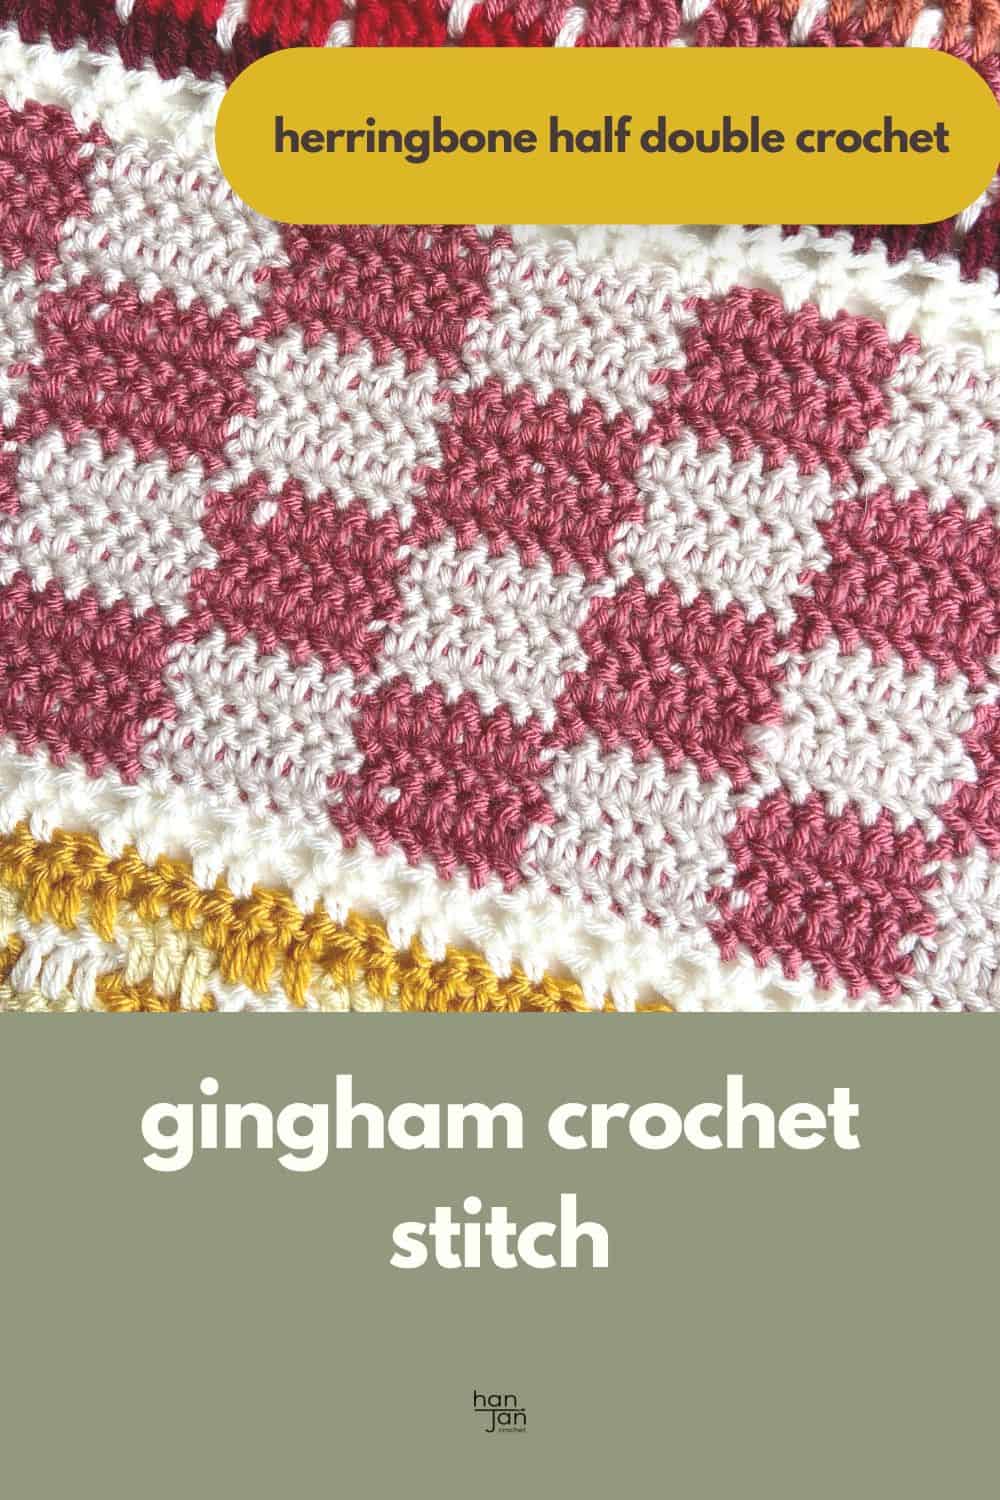 Gingham crochet stitch pattern.